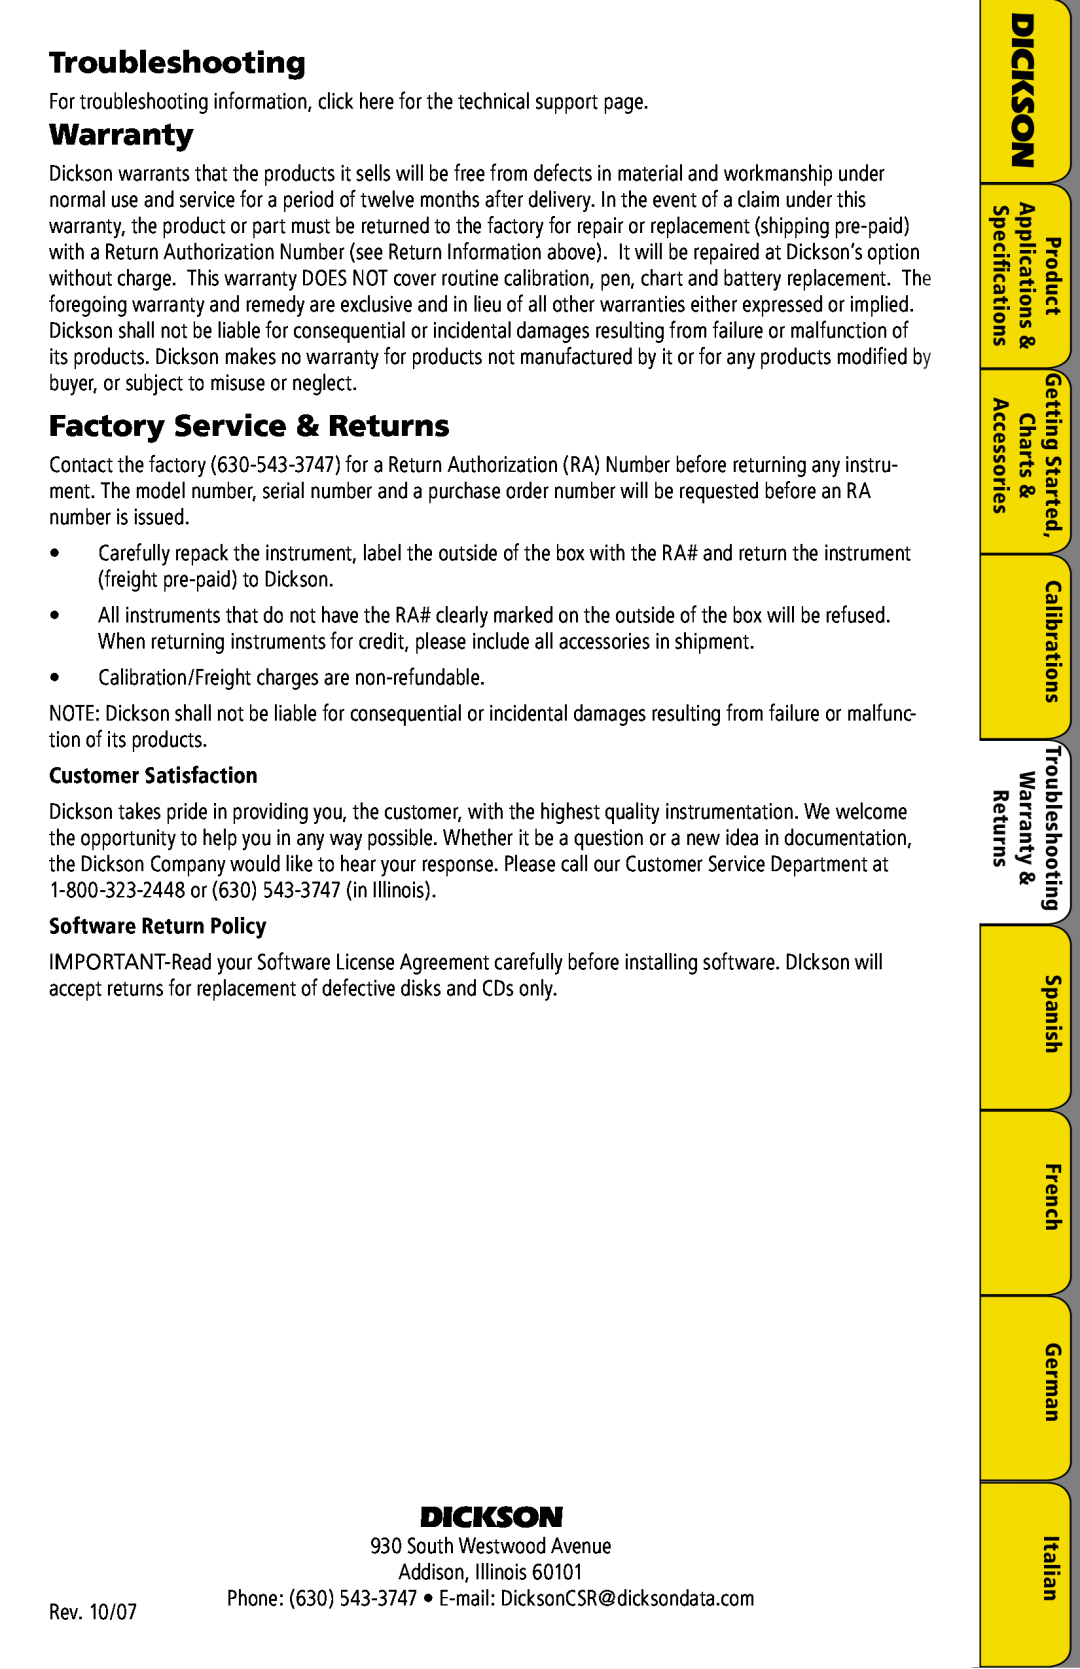 Dickson Industrial SC3 manual Troubleshooting, Warranty, Factory Service & Returns, Dickson 